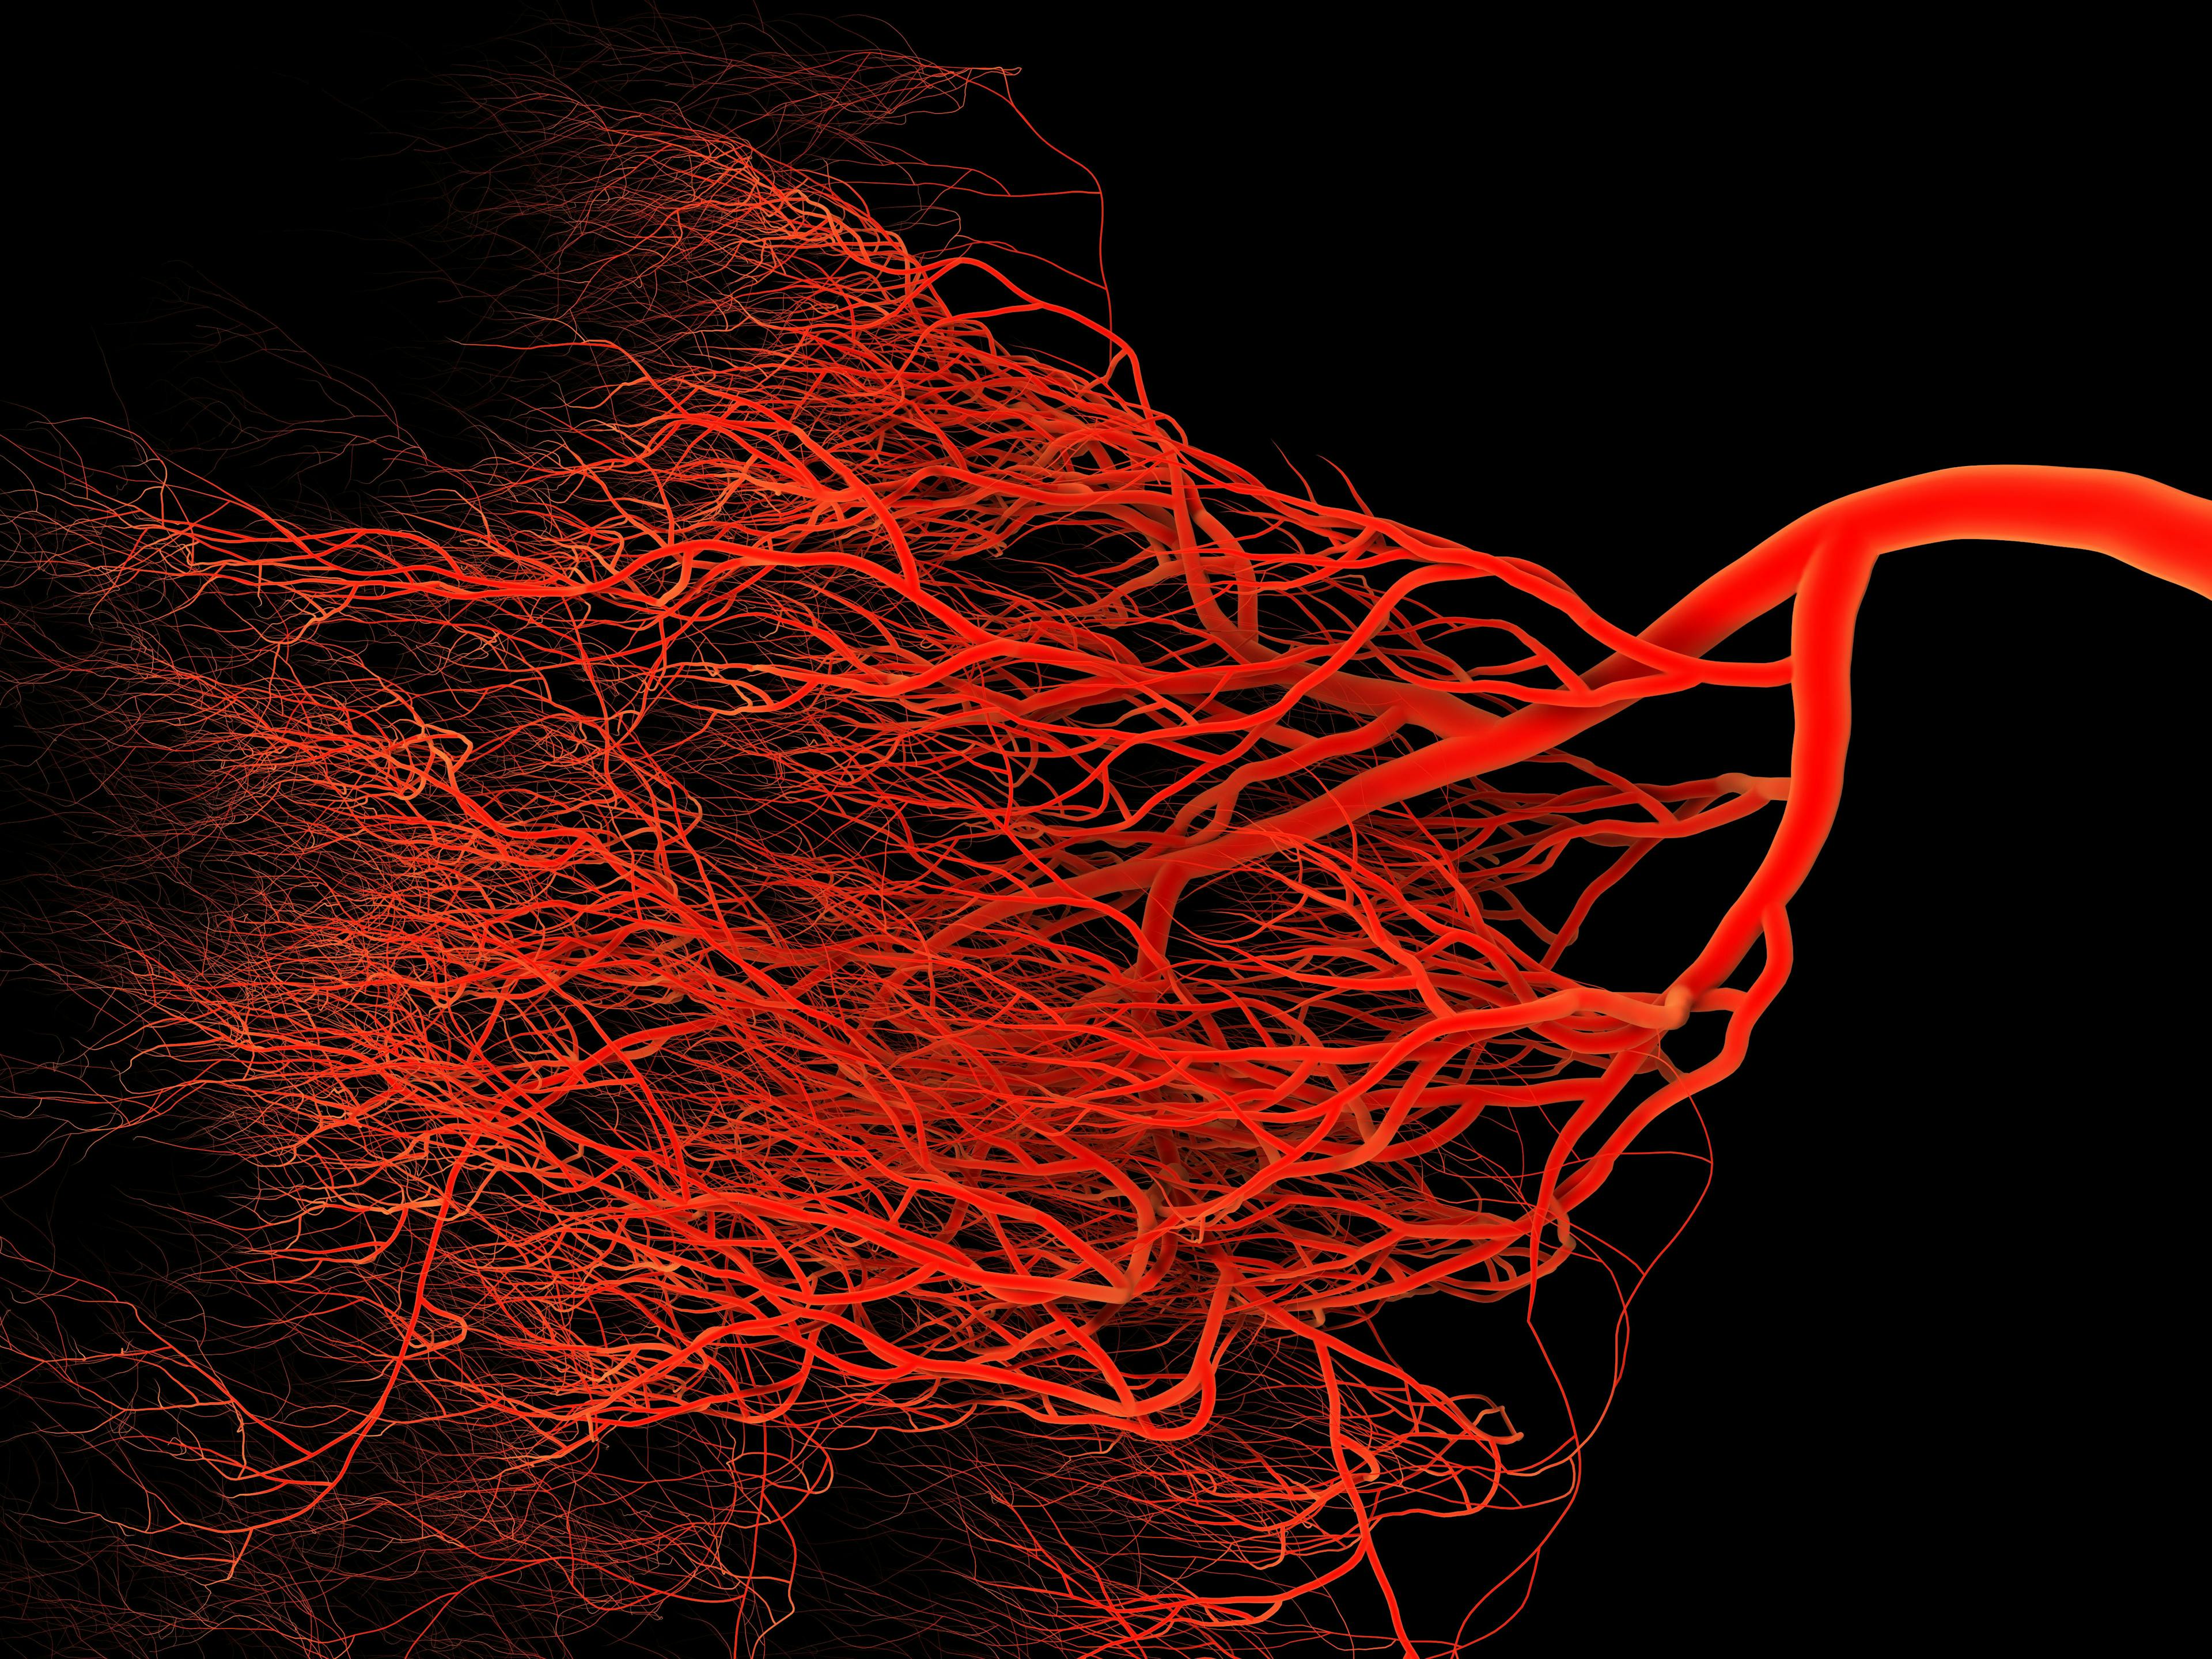 image of blood vessels